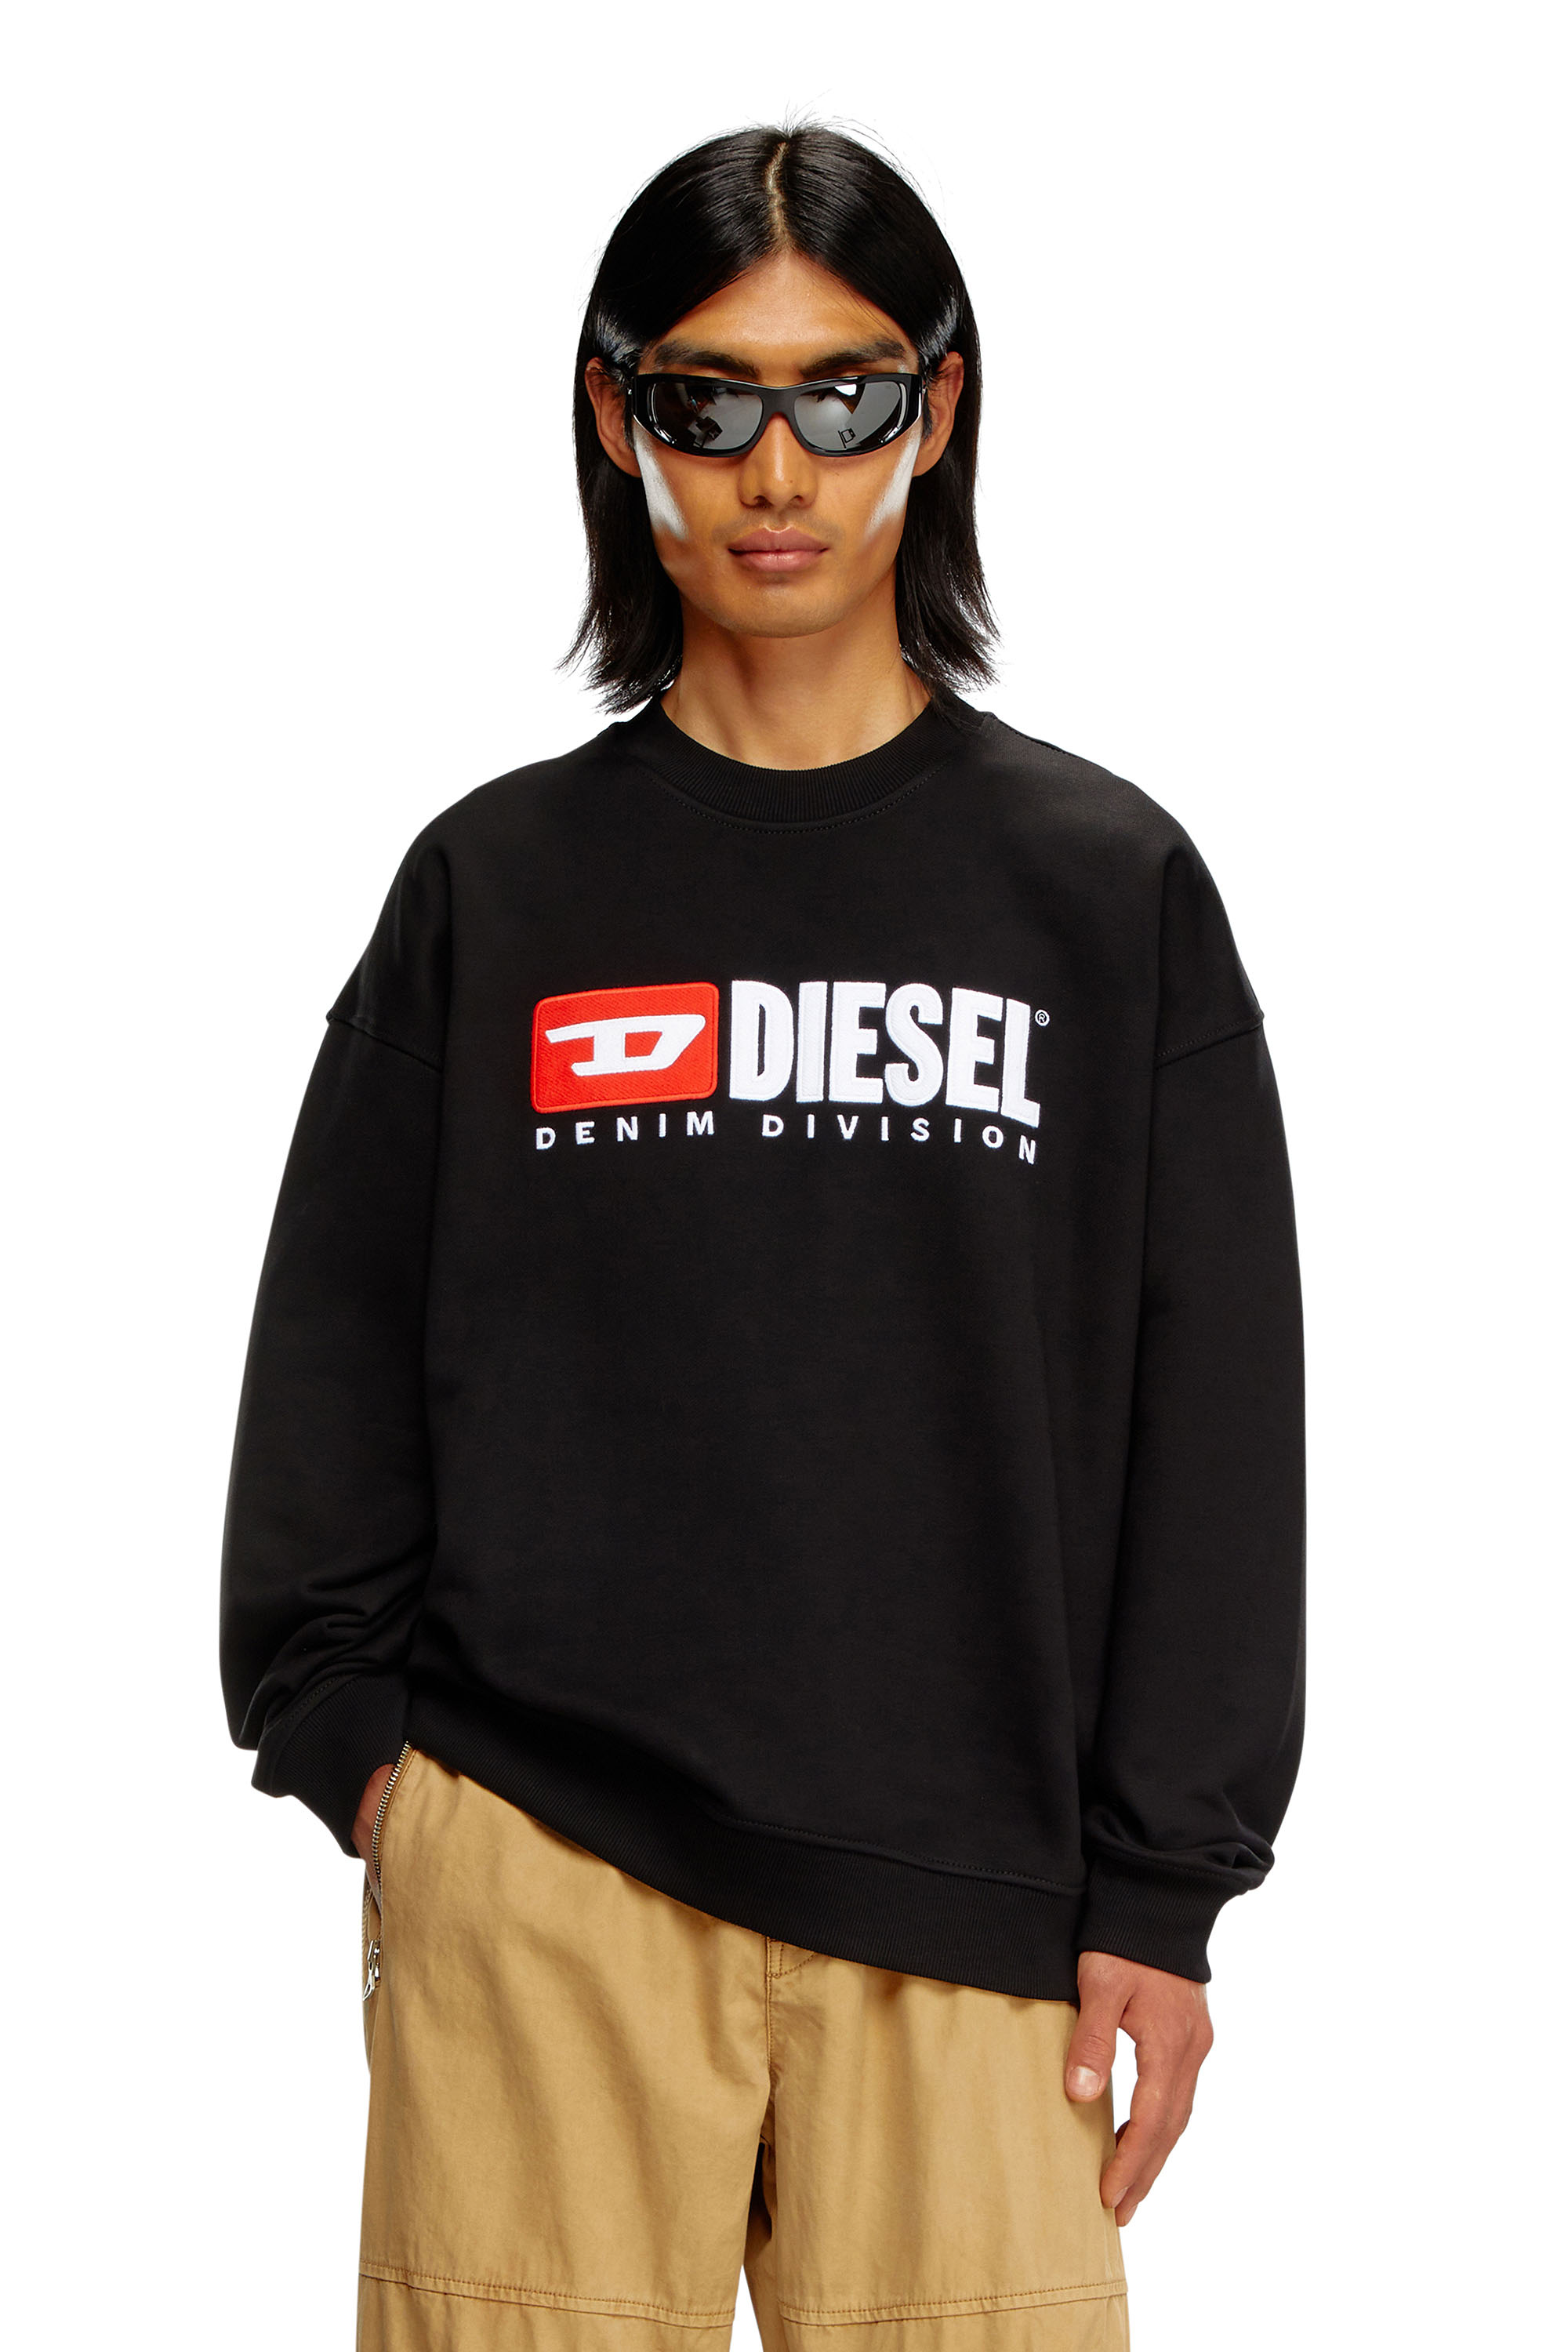 Diesel - S-BOXT-DIV, Man Sweatshirt with Denim Division logo in Black - Image 1